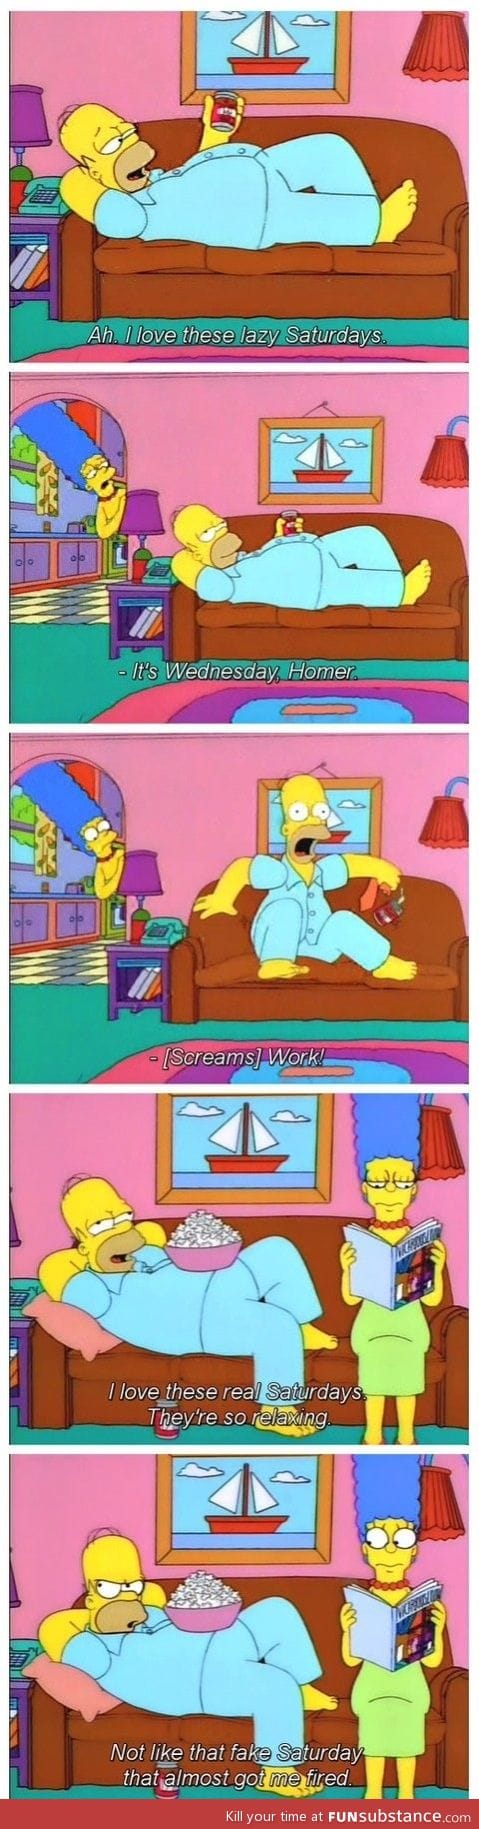 It's Wednesday, Homer.